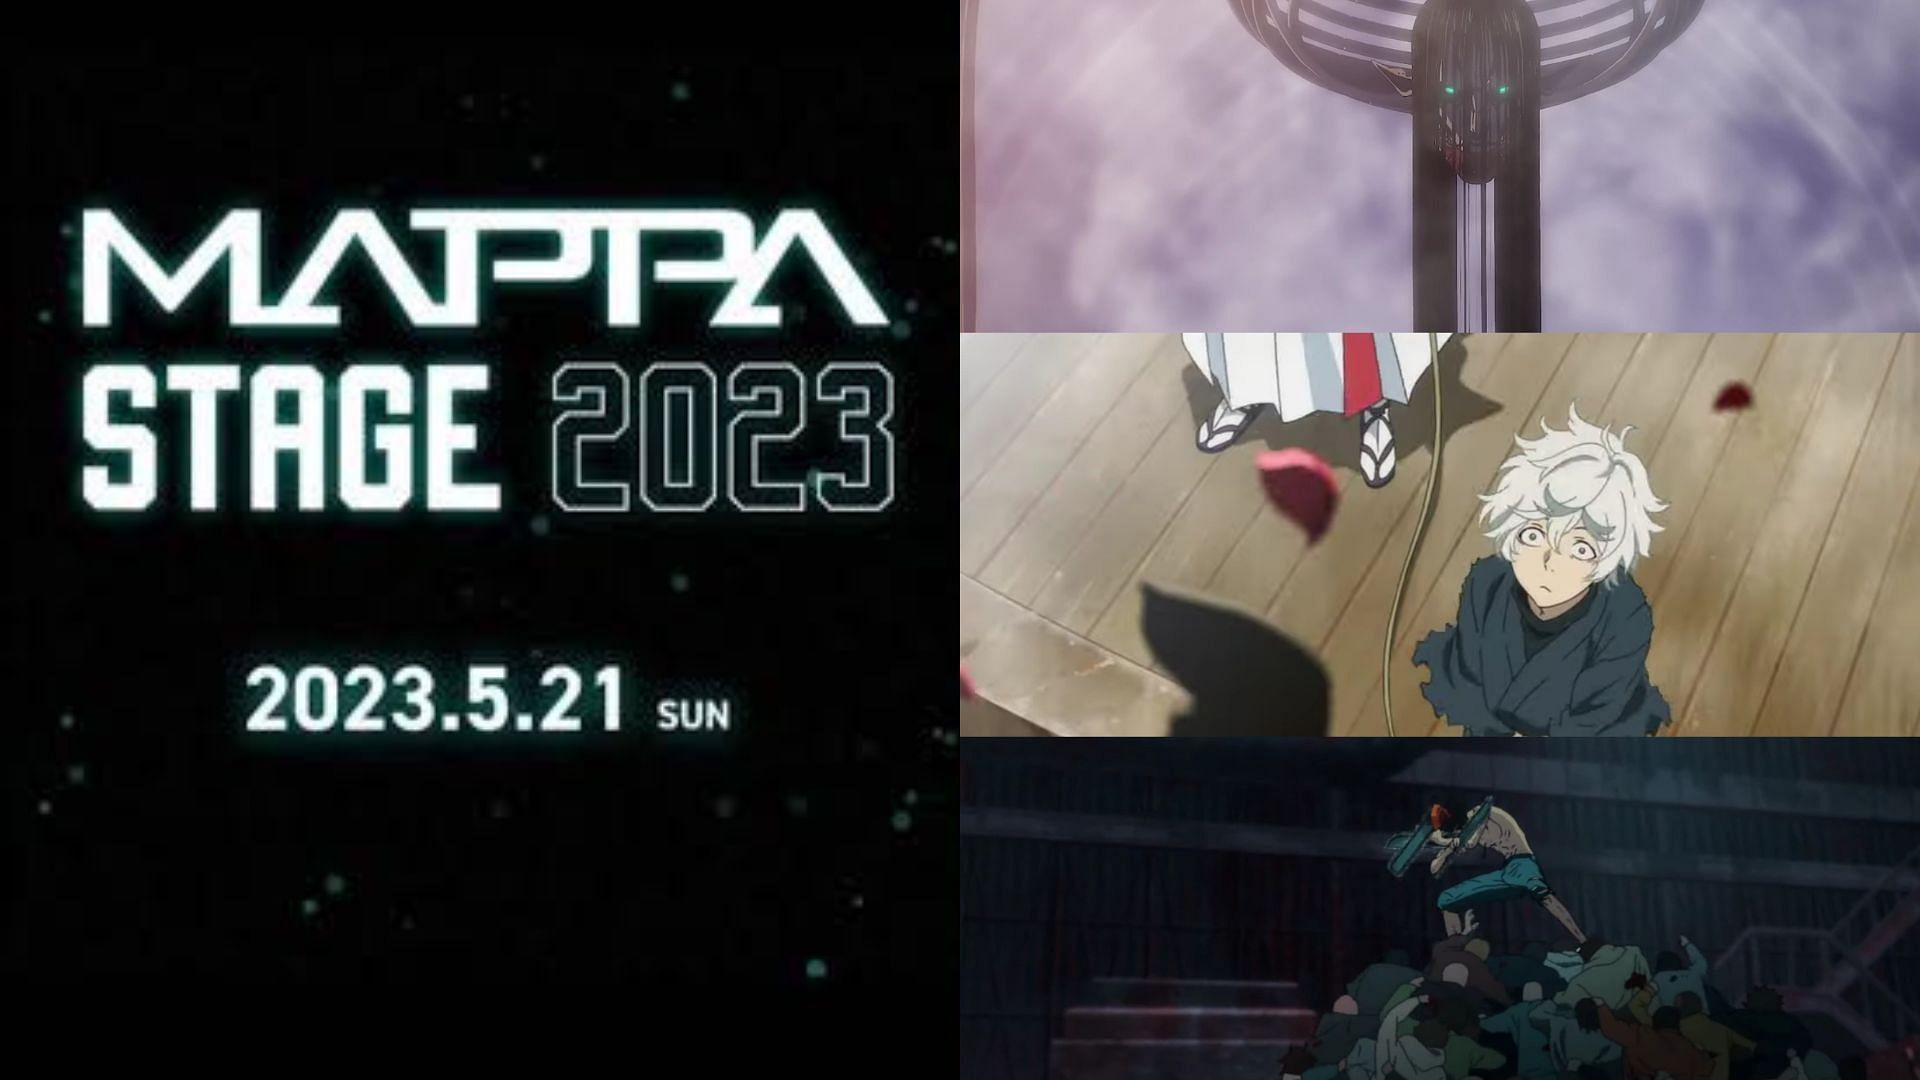 Attack on Titan Final Episode Countdown: Studio MAPPA Shares